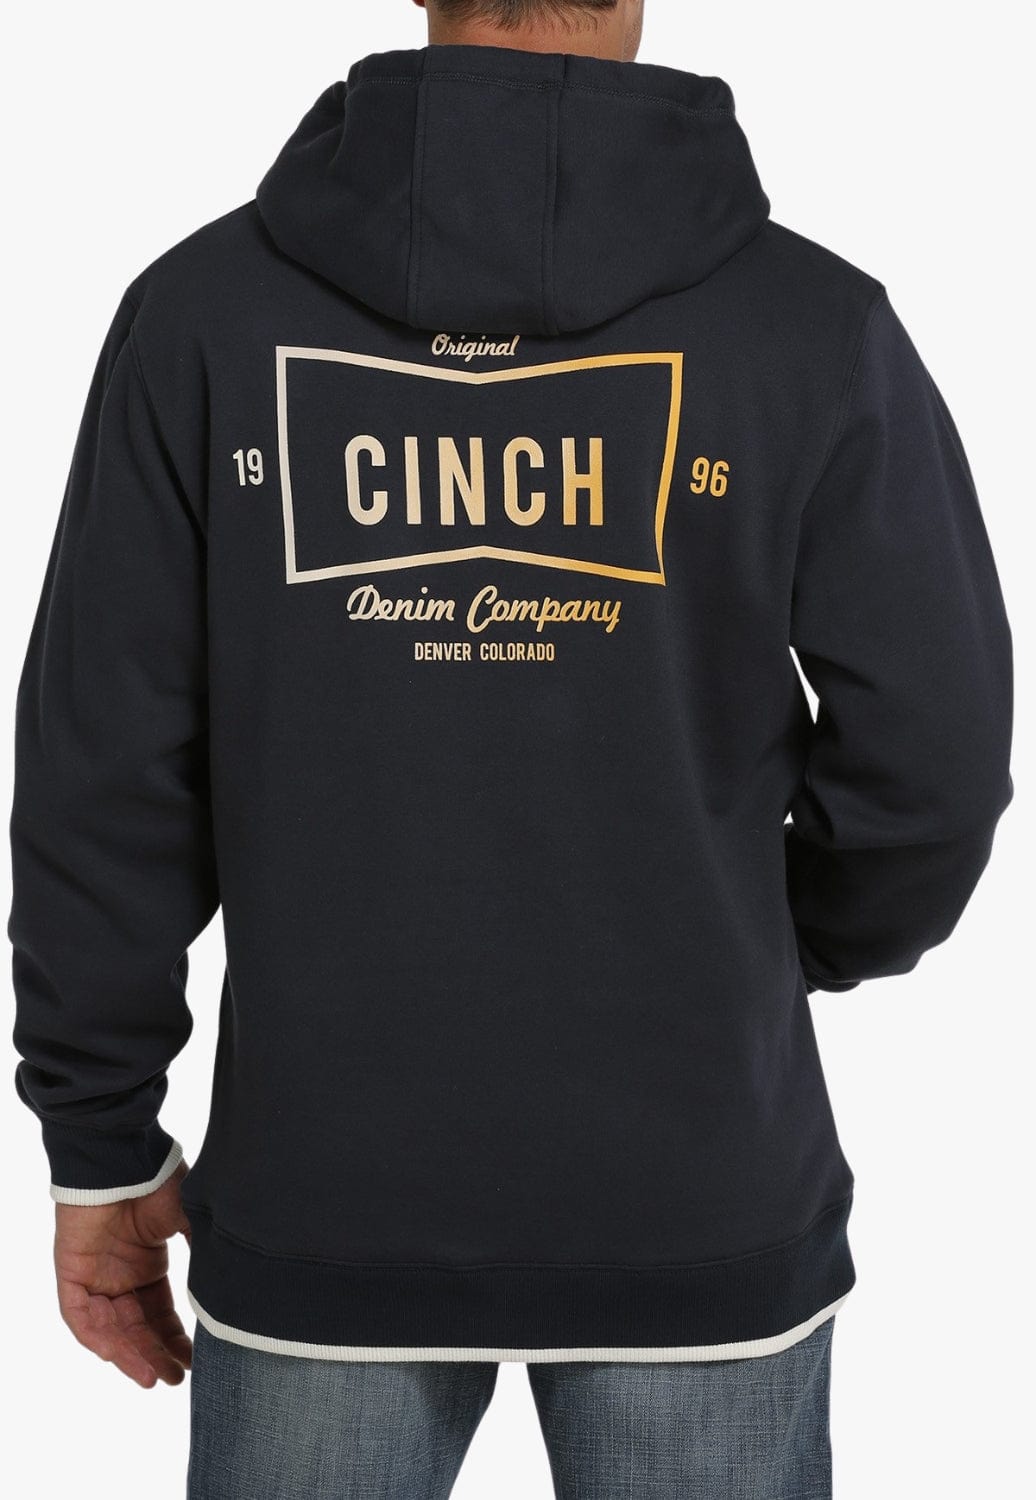 Cinch Factory Store, Denver - CO